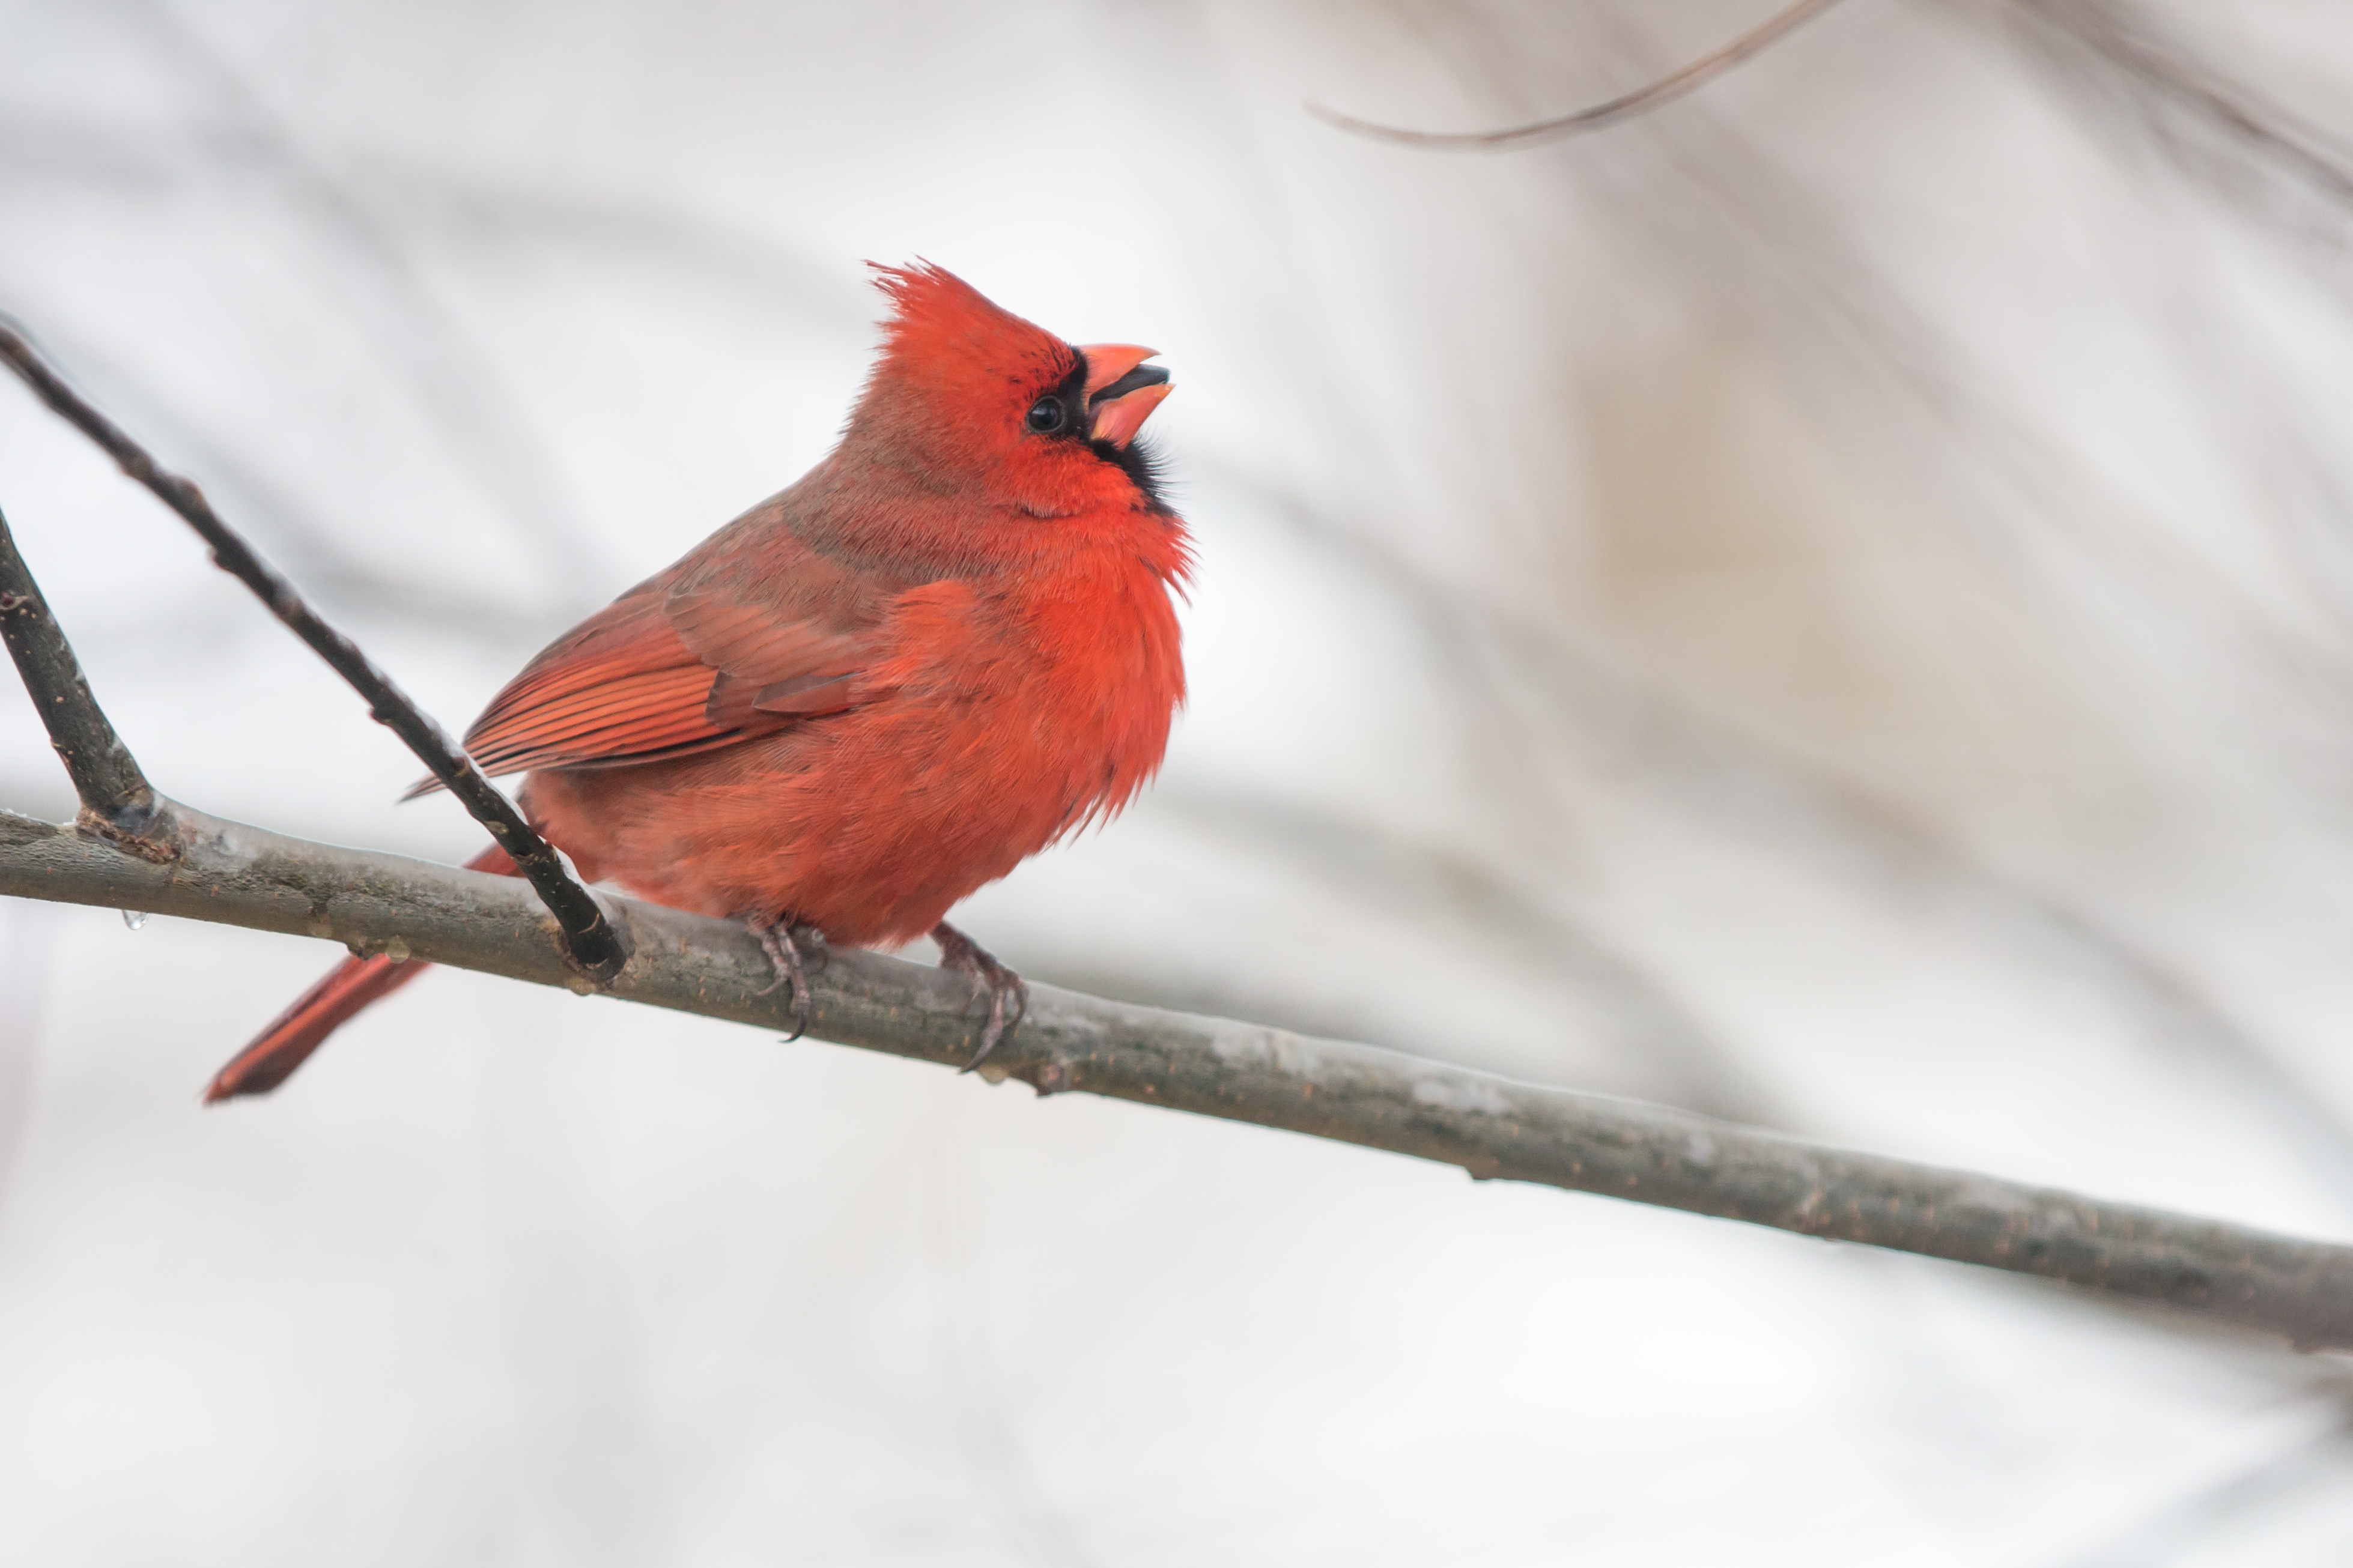 383559 descargar imagen animales, cardenal norteño, ave, rama, cardenal, invierno, aves: fondos de pantalla y protectores de pantalla gratis